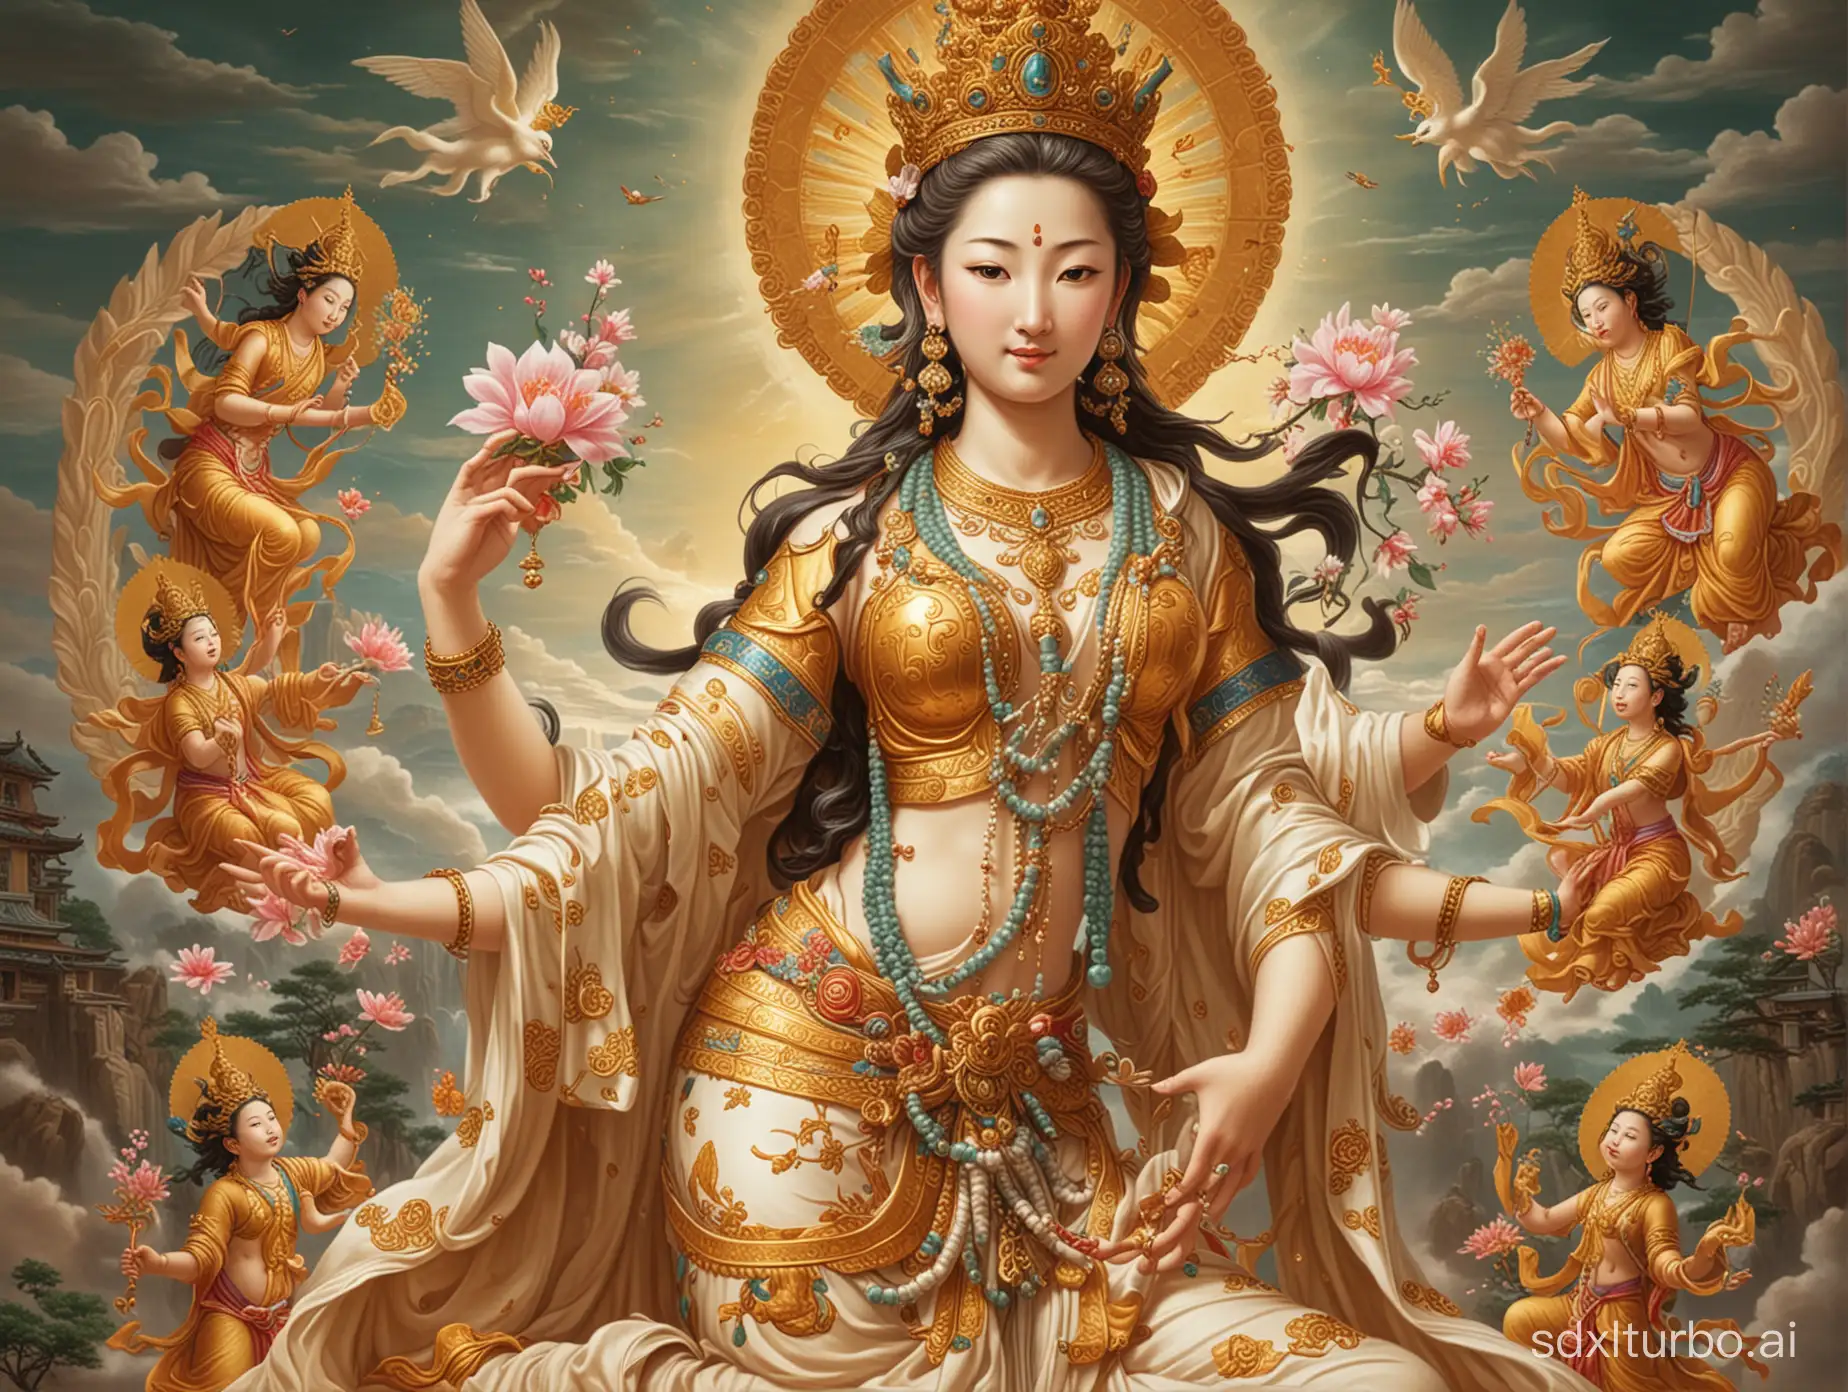 The Bodhisattva Avalokitesvara who delivers wealth to children